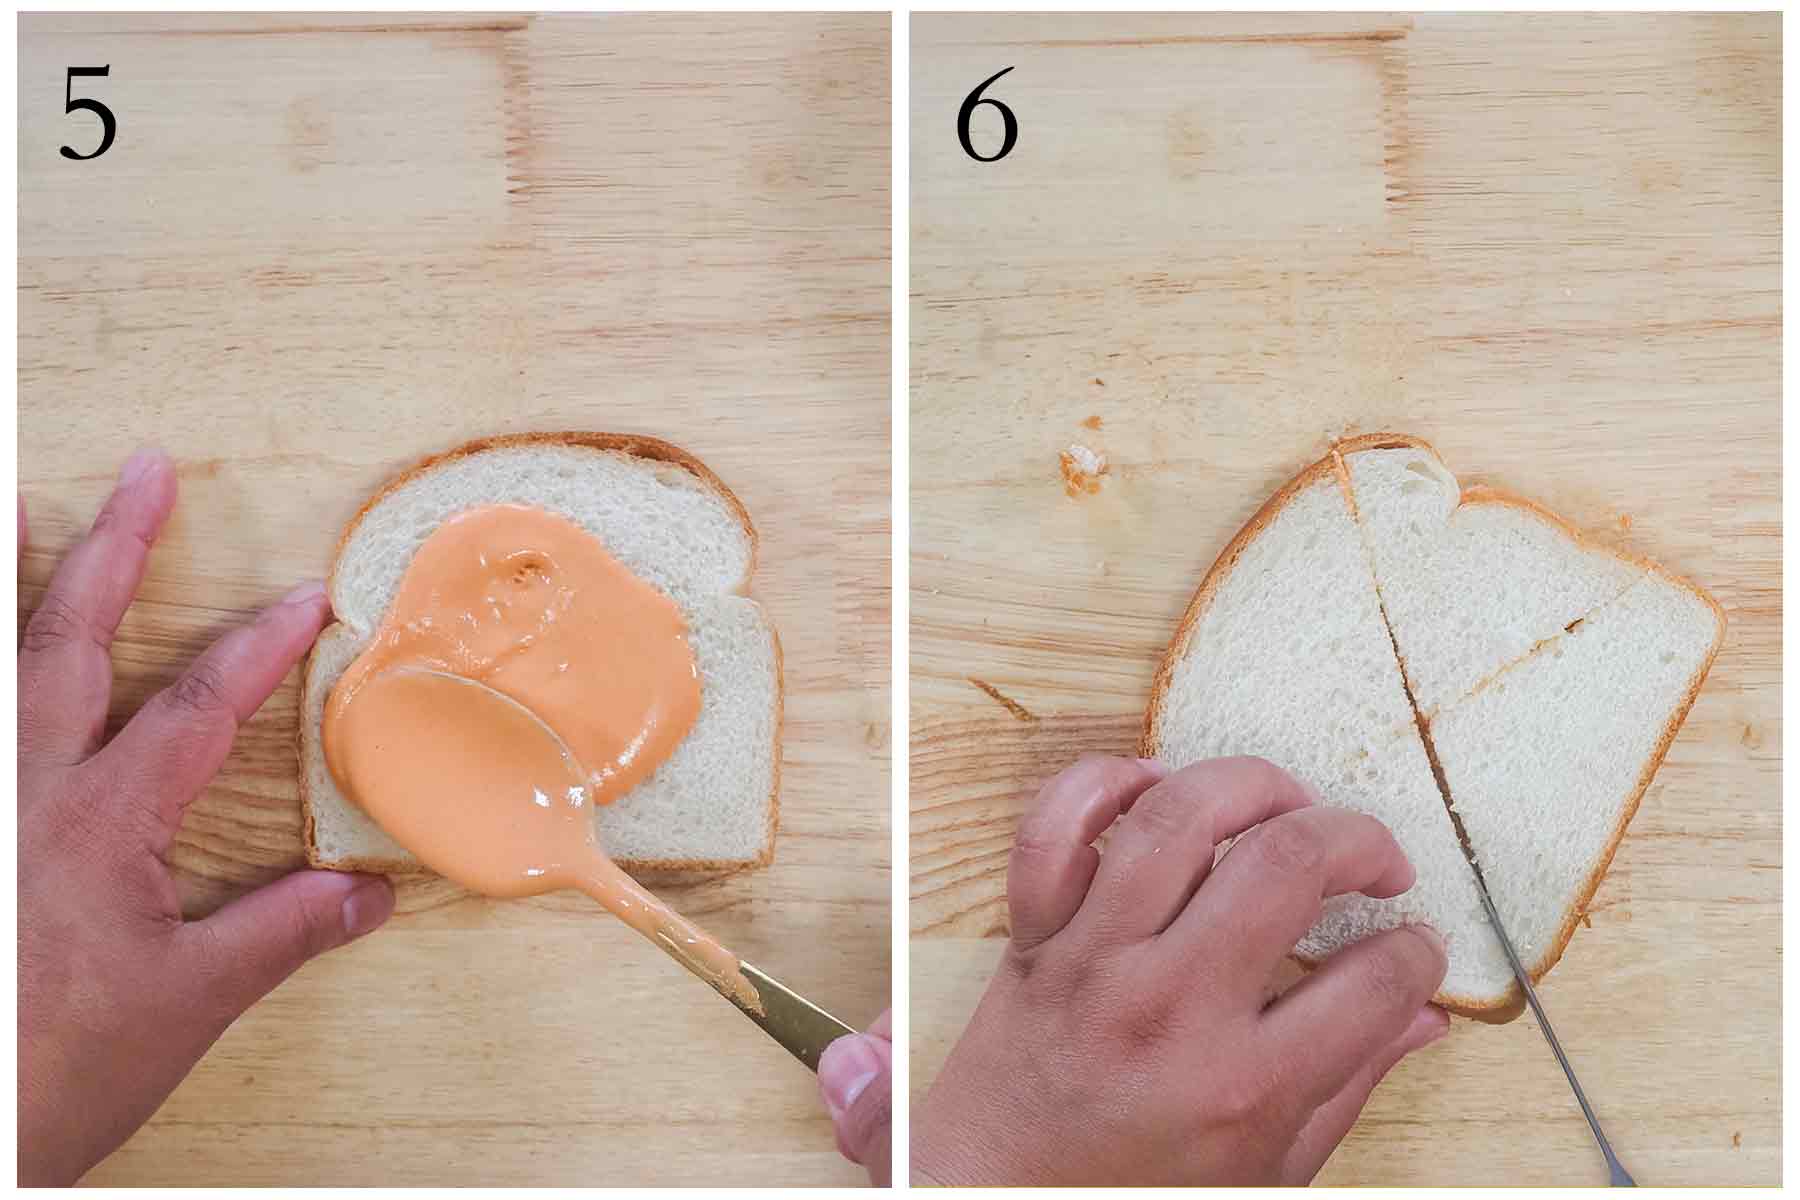 steps 5-6 on how to make a sandwich de mezcla.